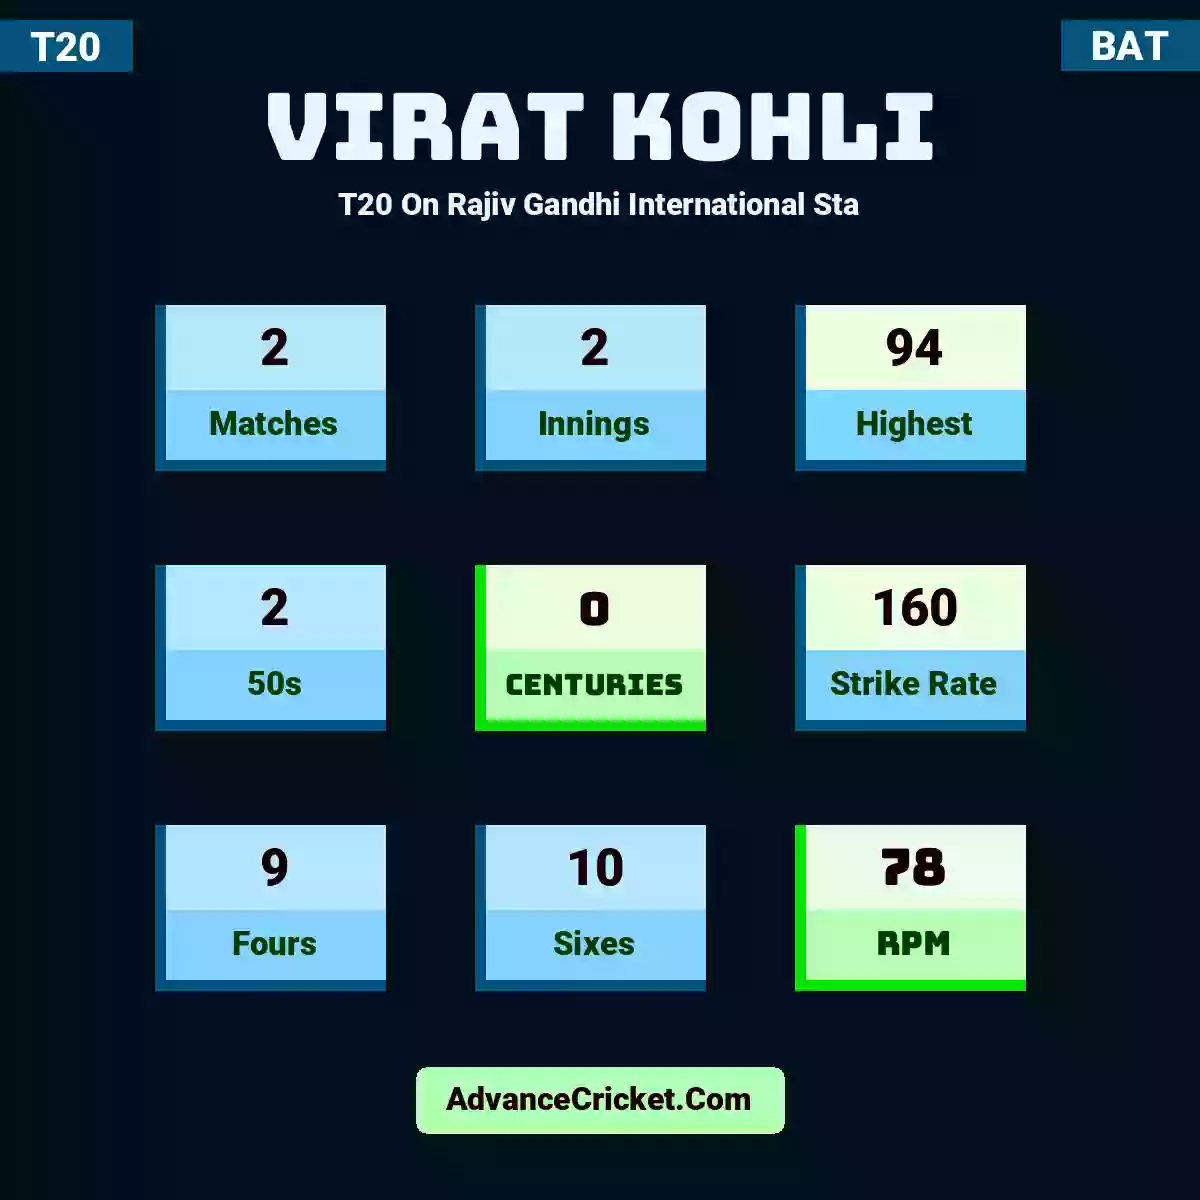 Virat Kohli T20  On Rajiv Gandhi International Sta, Virat Kohli played 2 matches, scored 94 runs as highest, 2 half-centuries, and 0 centuries, with a strike rate of 160. V.Kohli hit 9 fours and 10 sixes, with an RPM of 78.